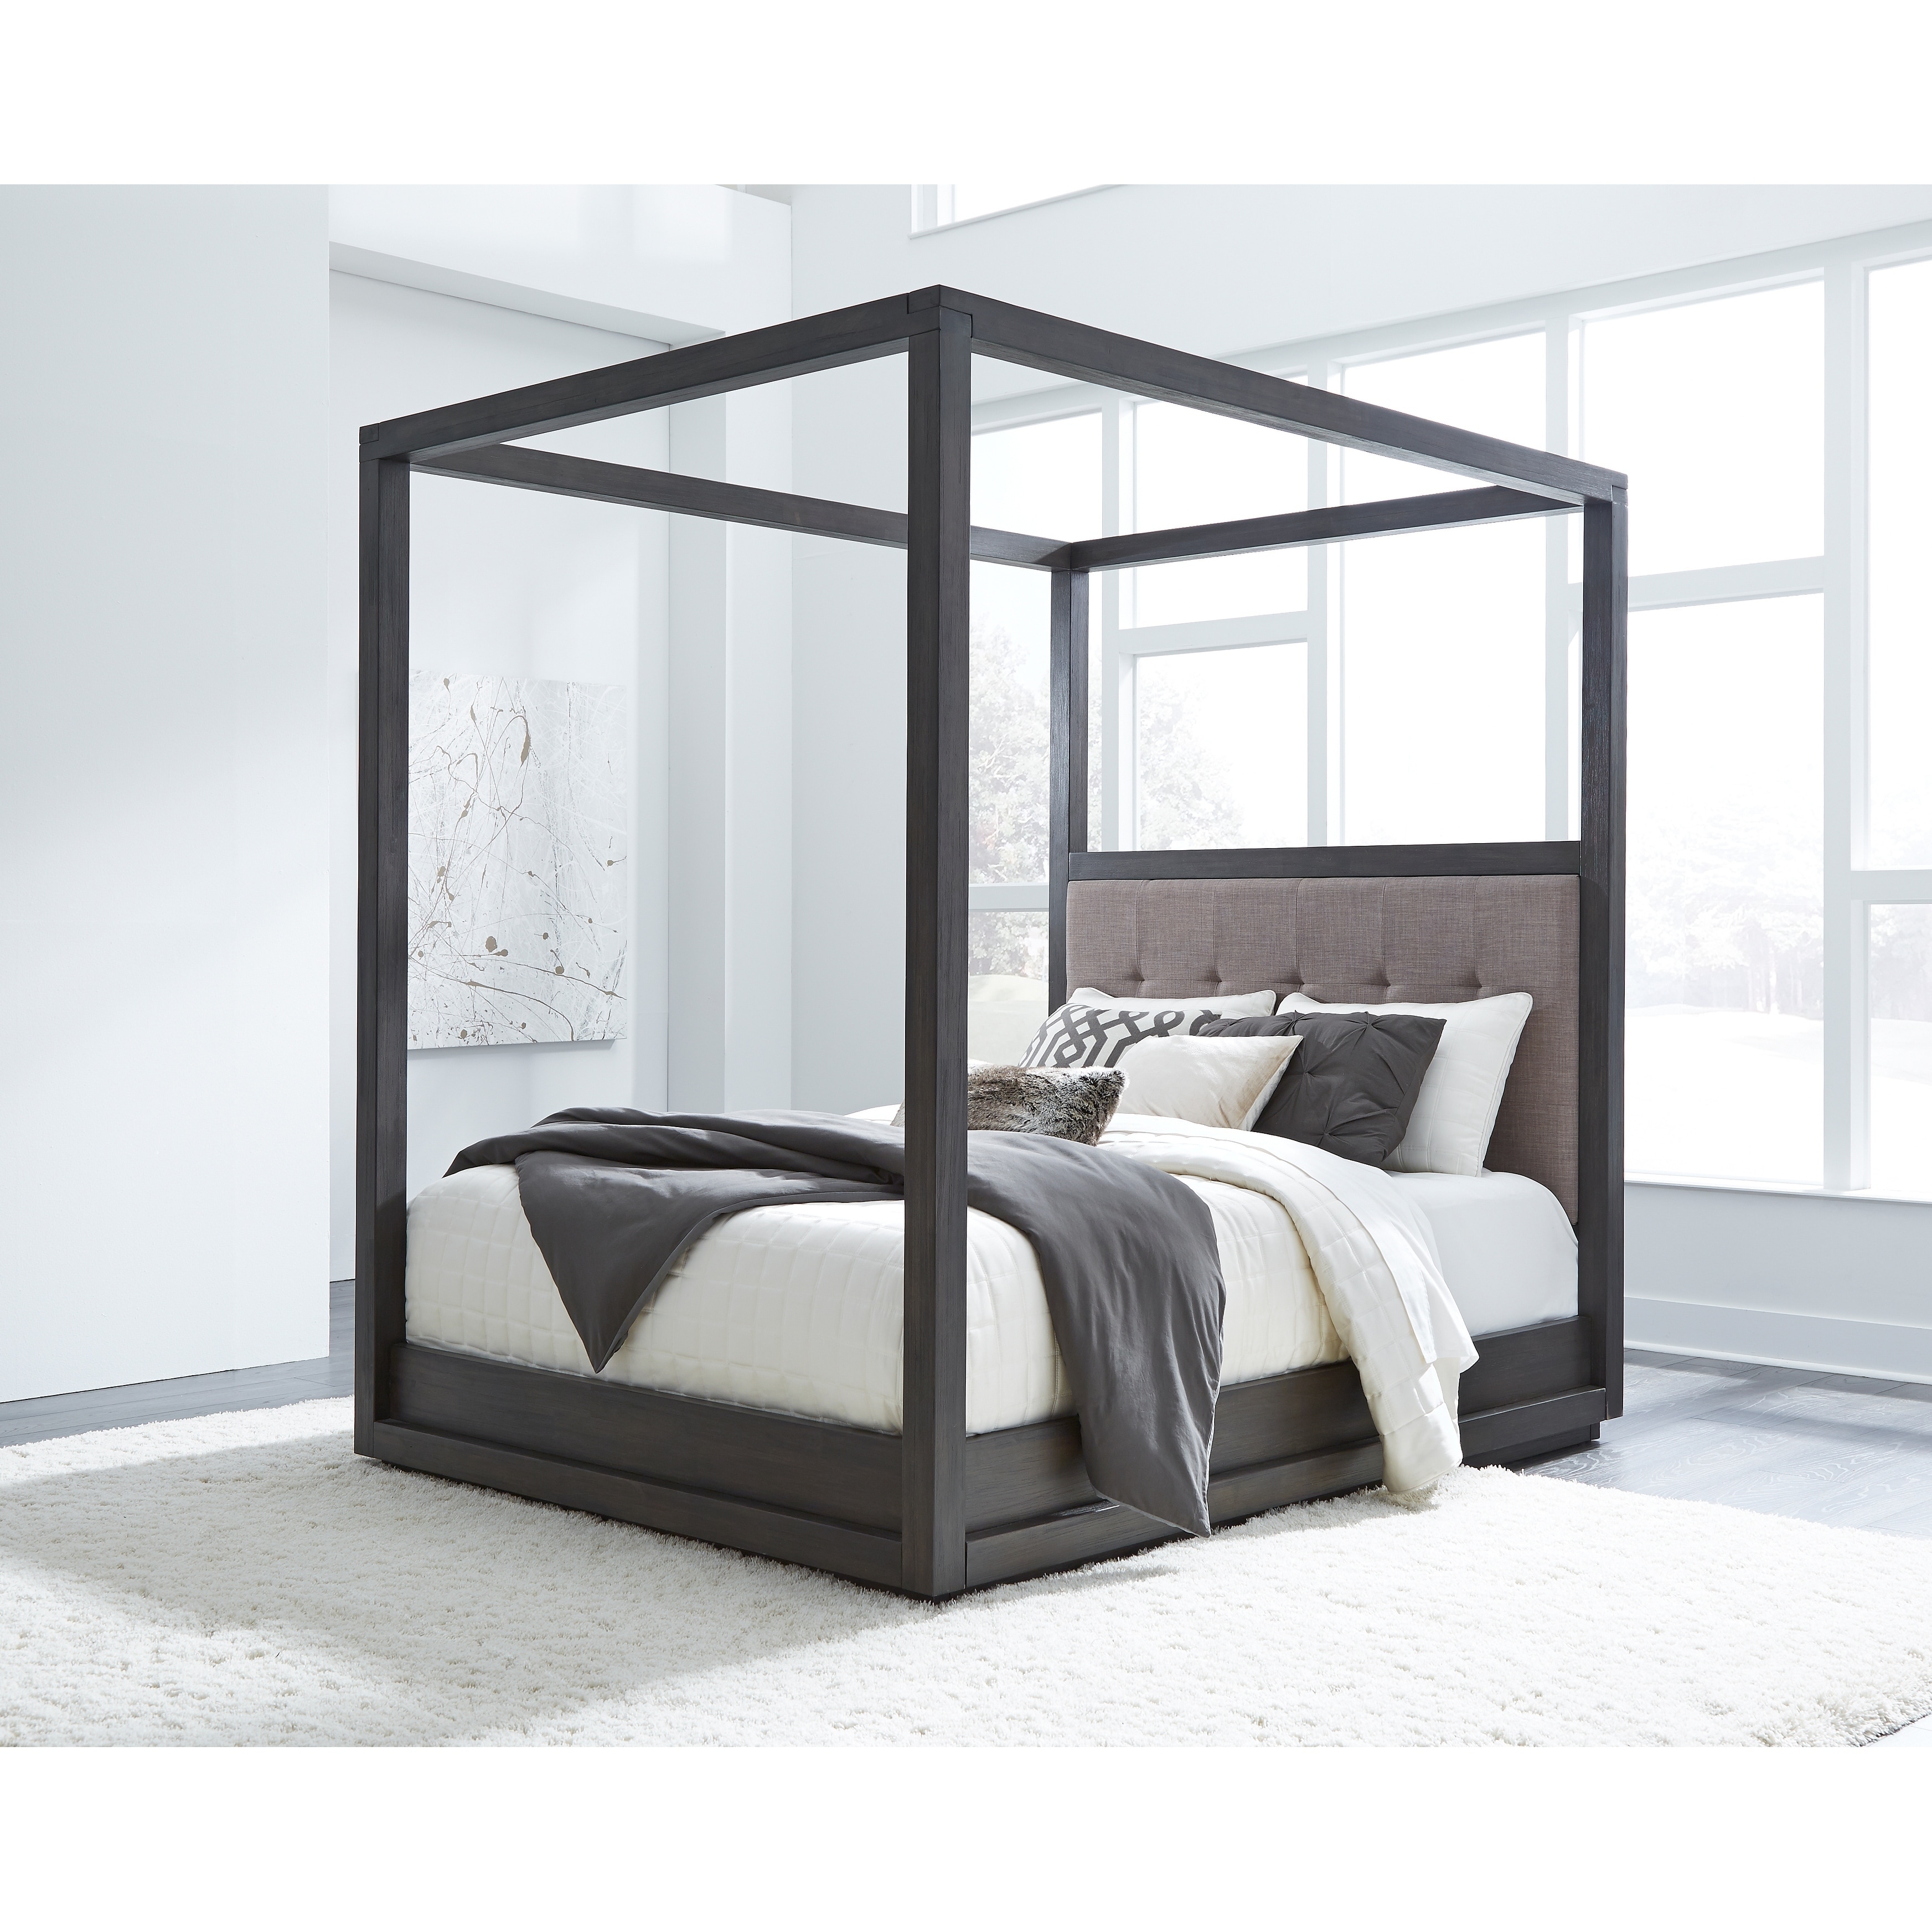 Carbon Loft Barron Queen size Canopy Bed   Overstock   29921183